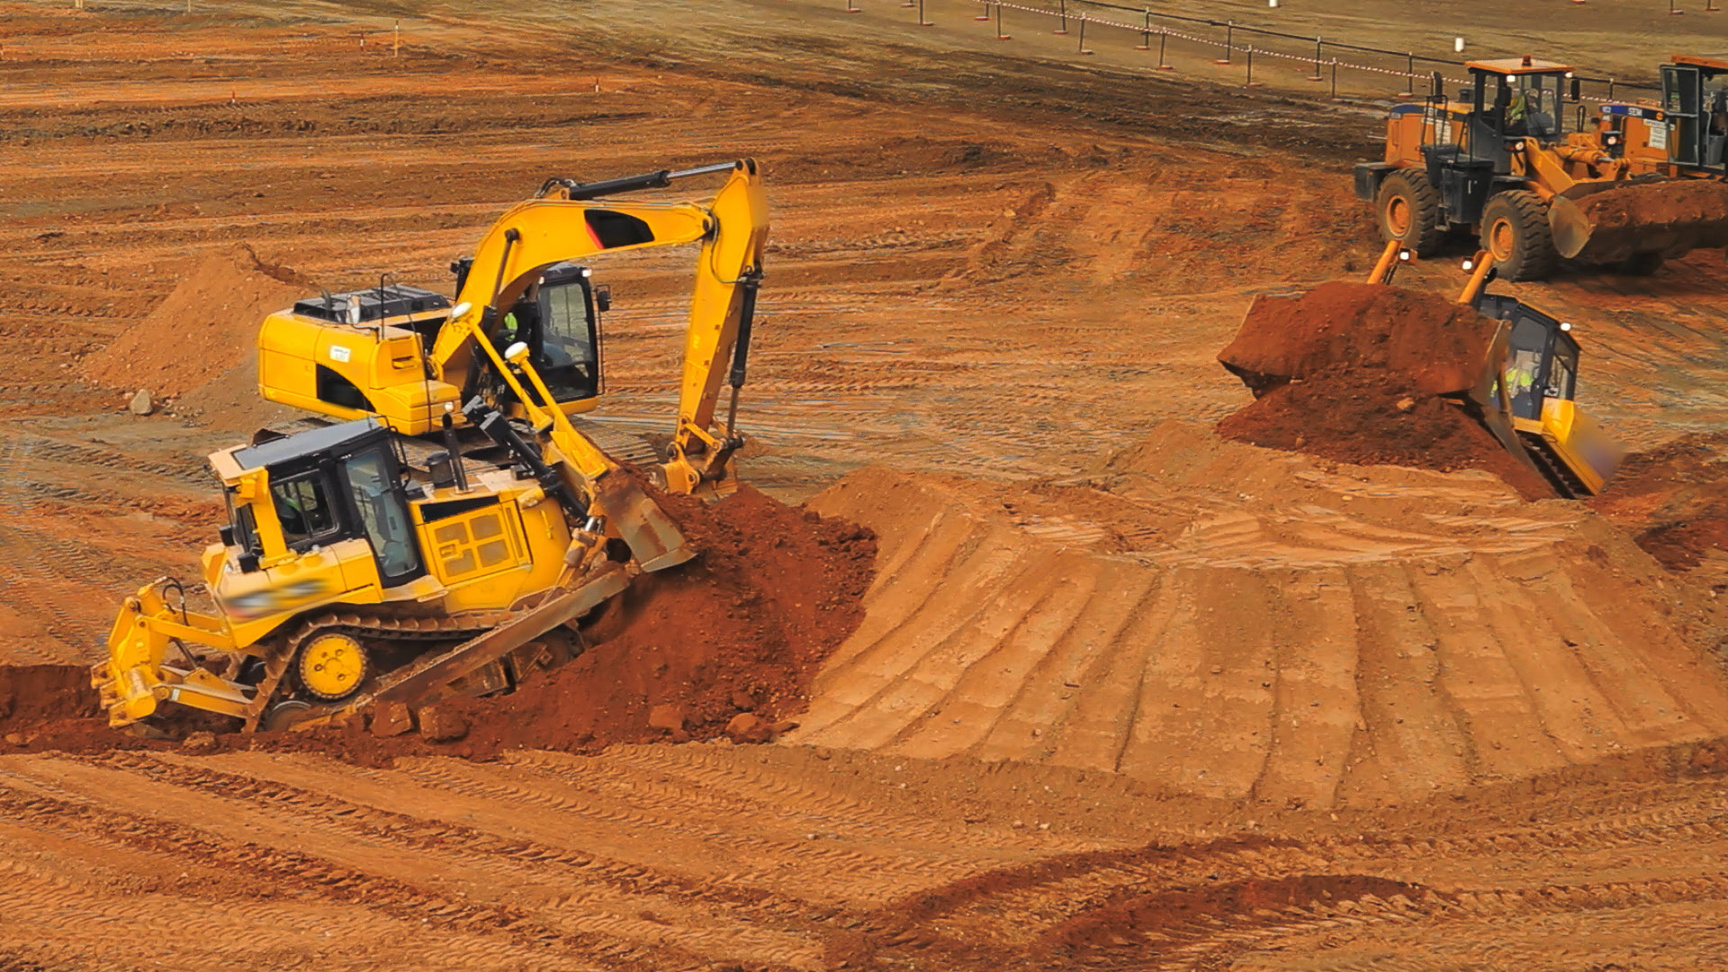 Construction equipment at mining quarry. Mining industry. Mining machinery